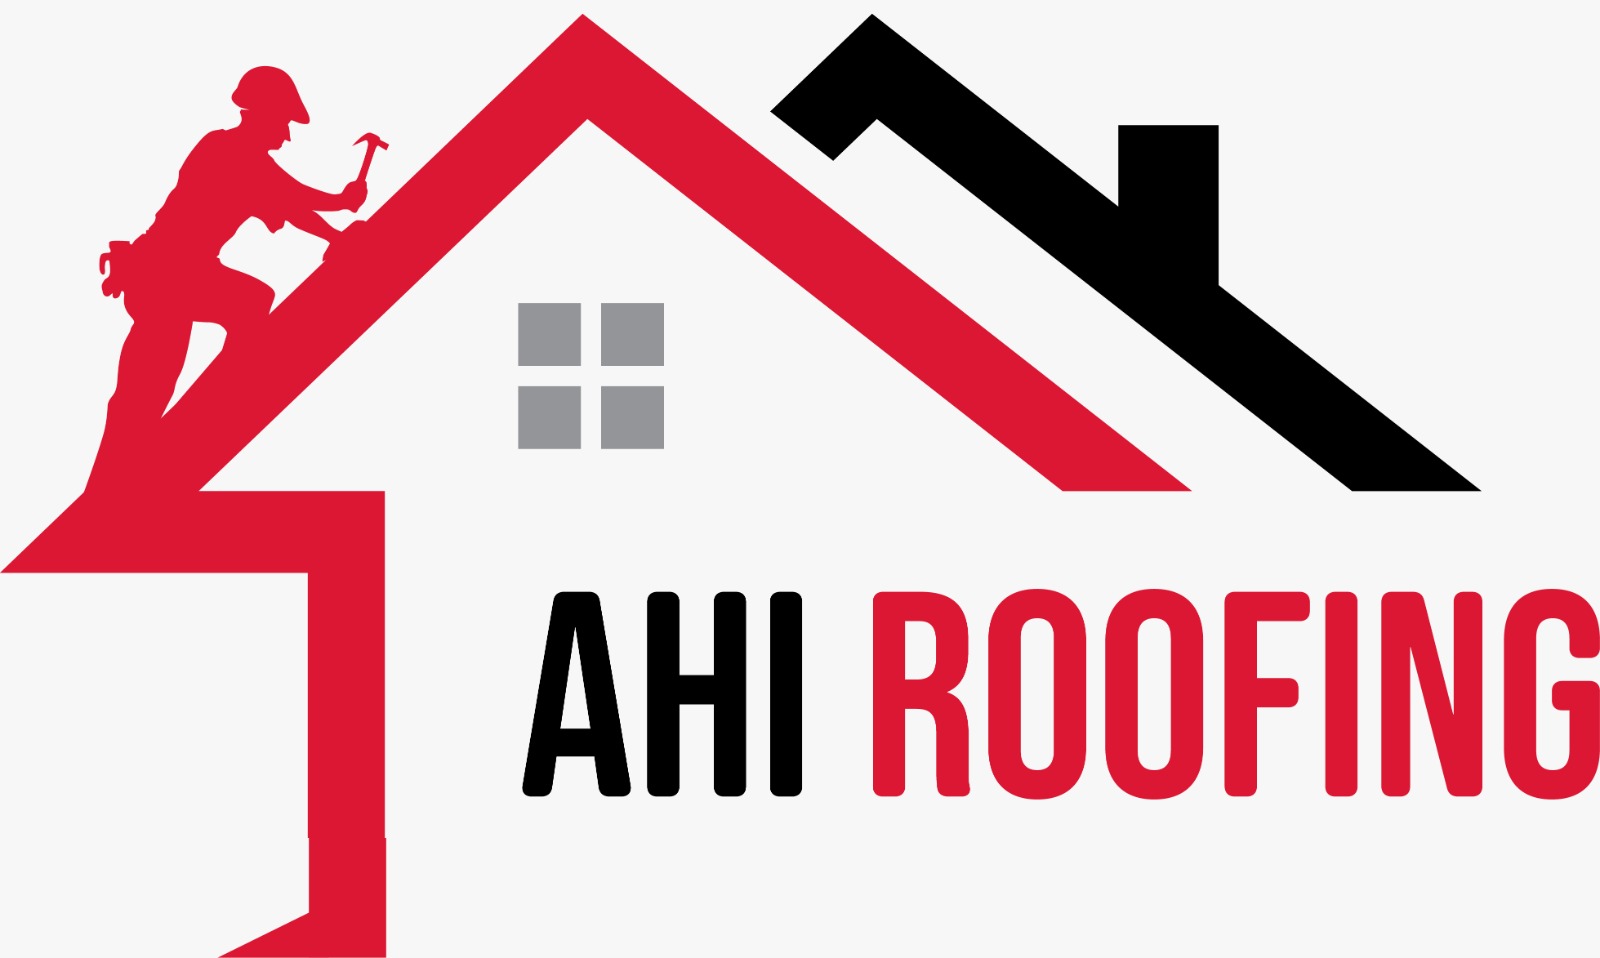 American Home Improvement, Inc. Logo